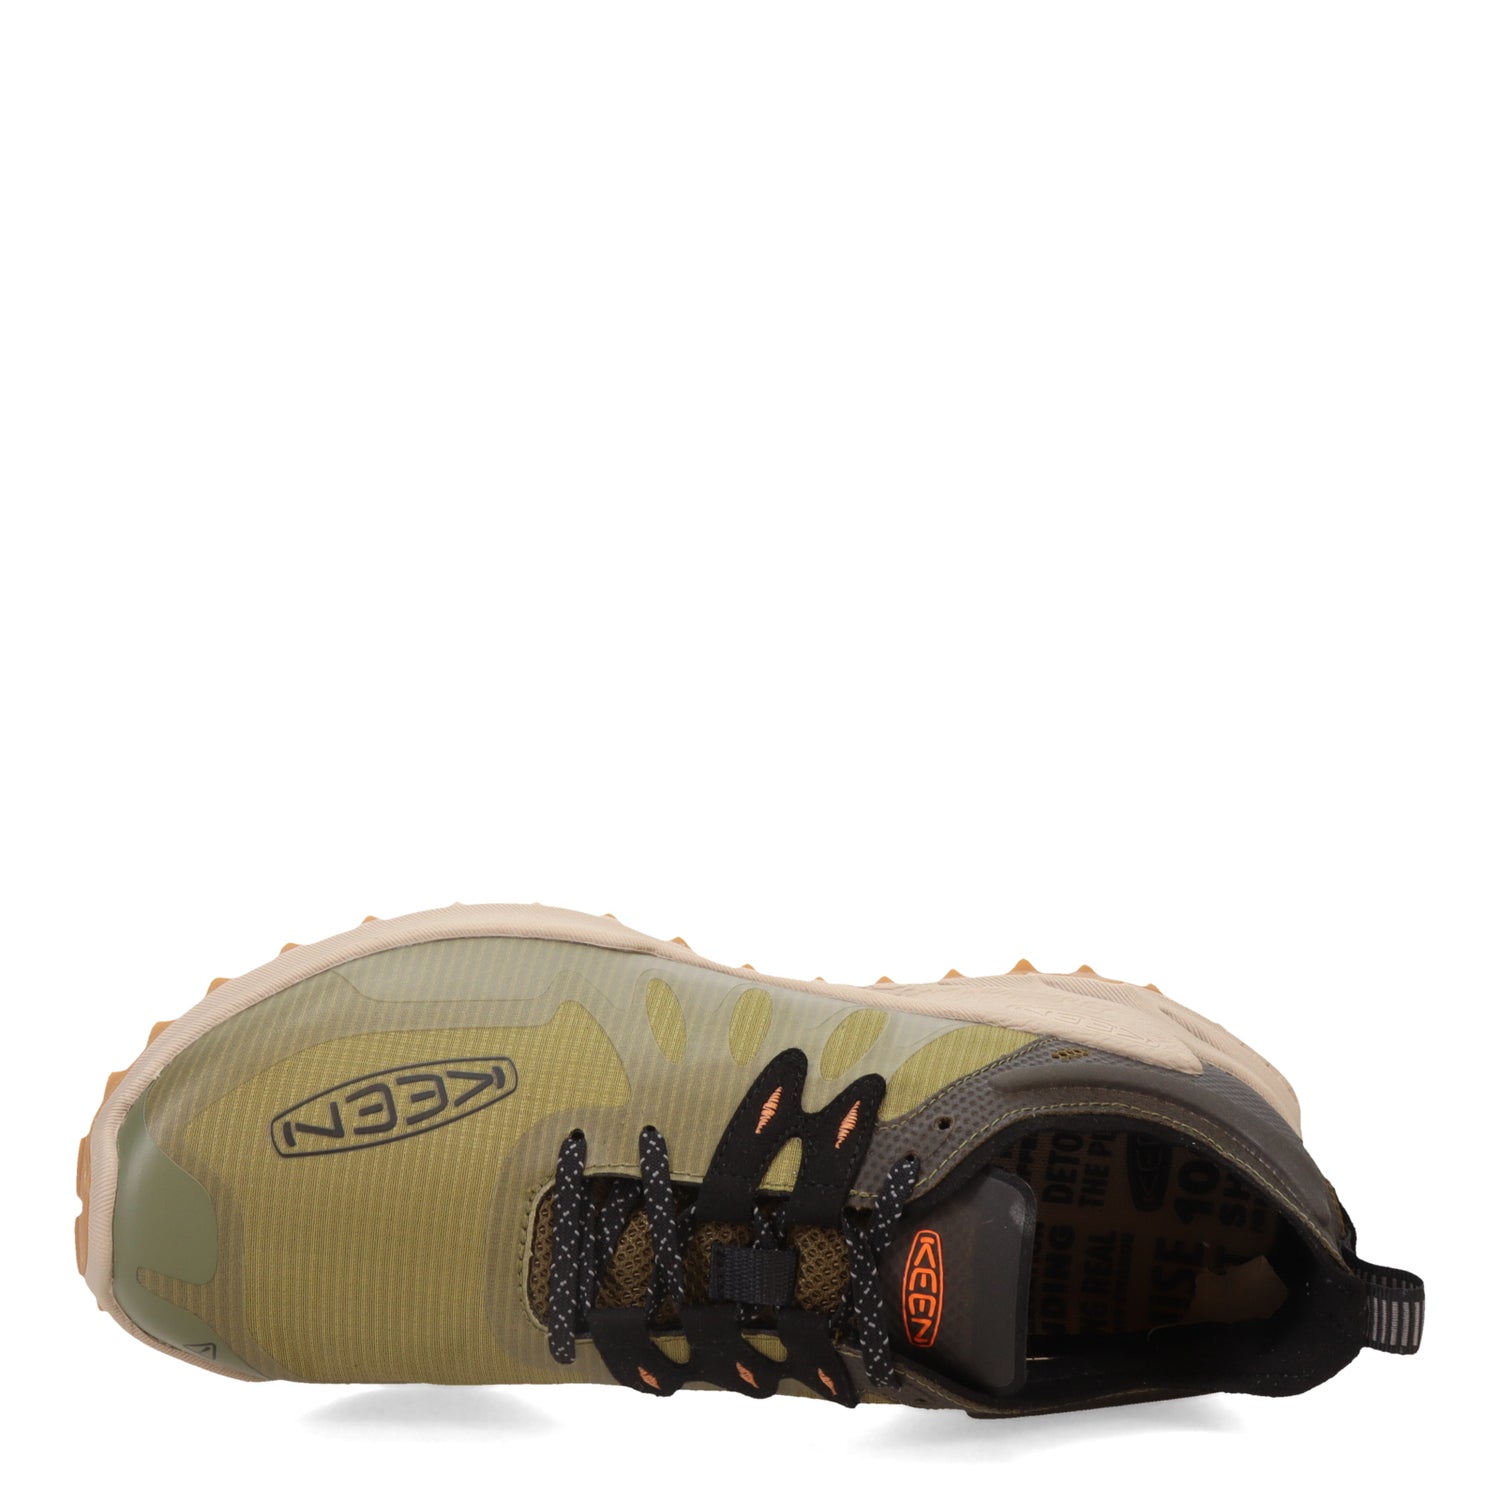 Peltz Shoes  Men's KEEN Zionic Speed Hiking Shoe Dark Olive/Scarlet Ibis 1028183